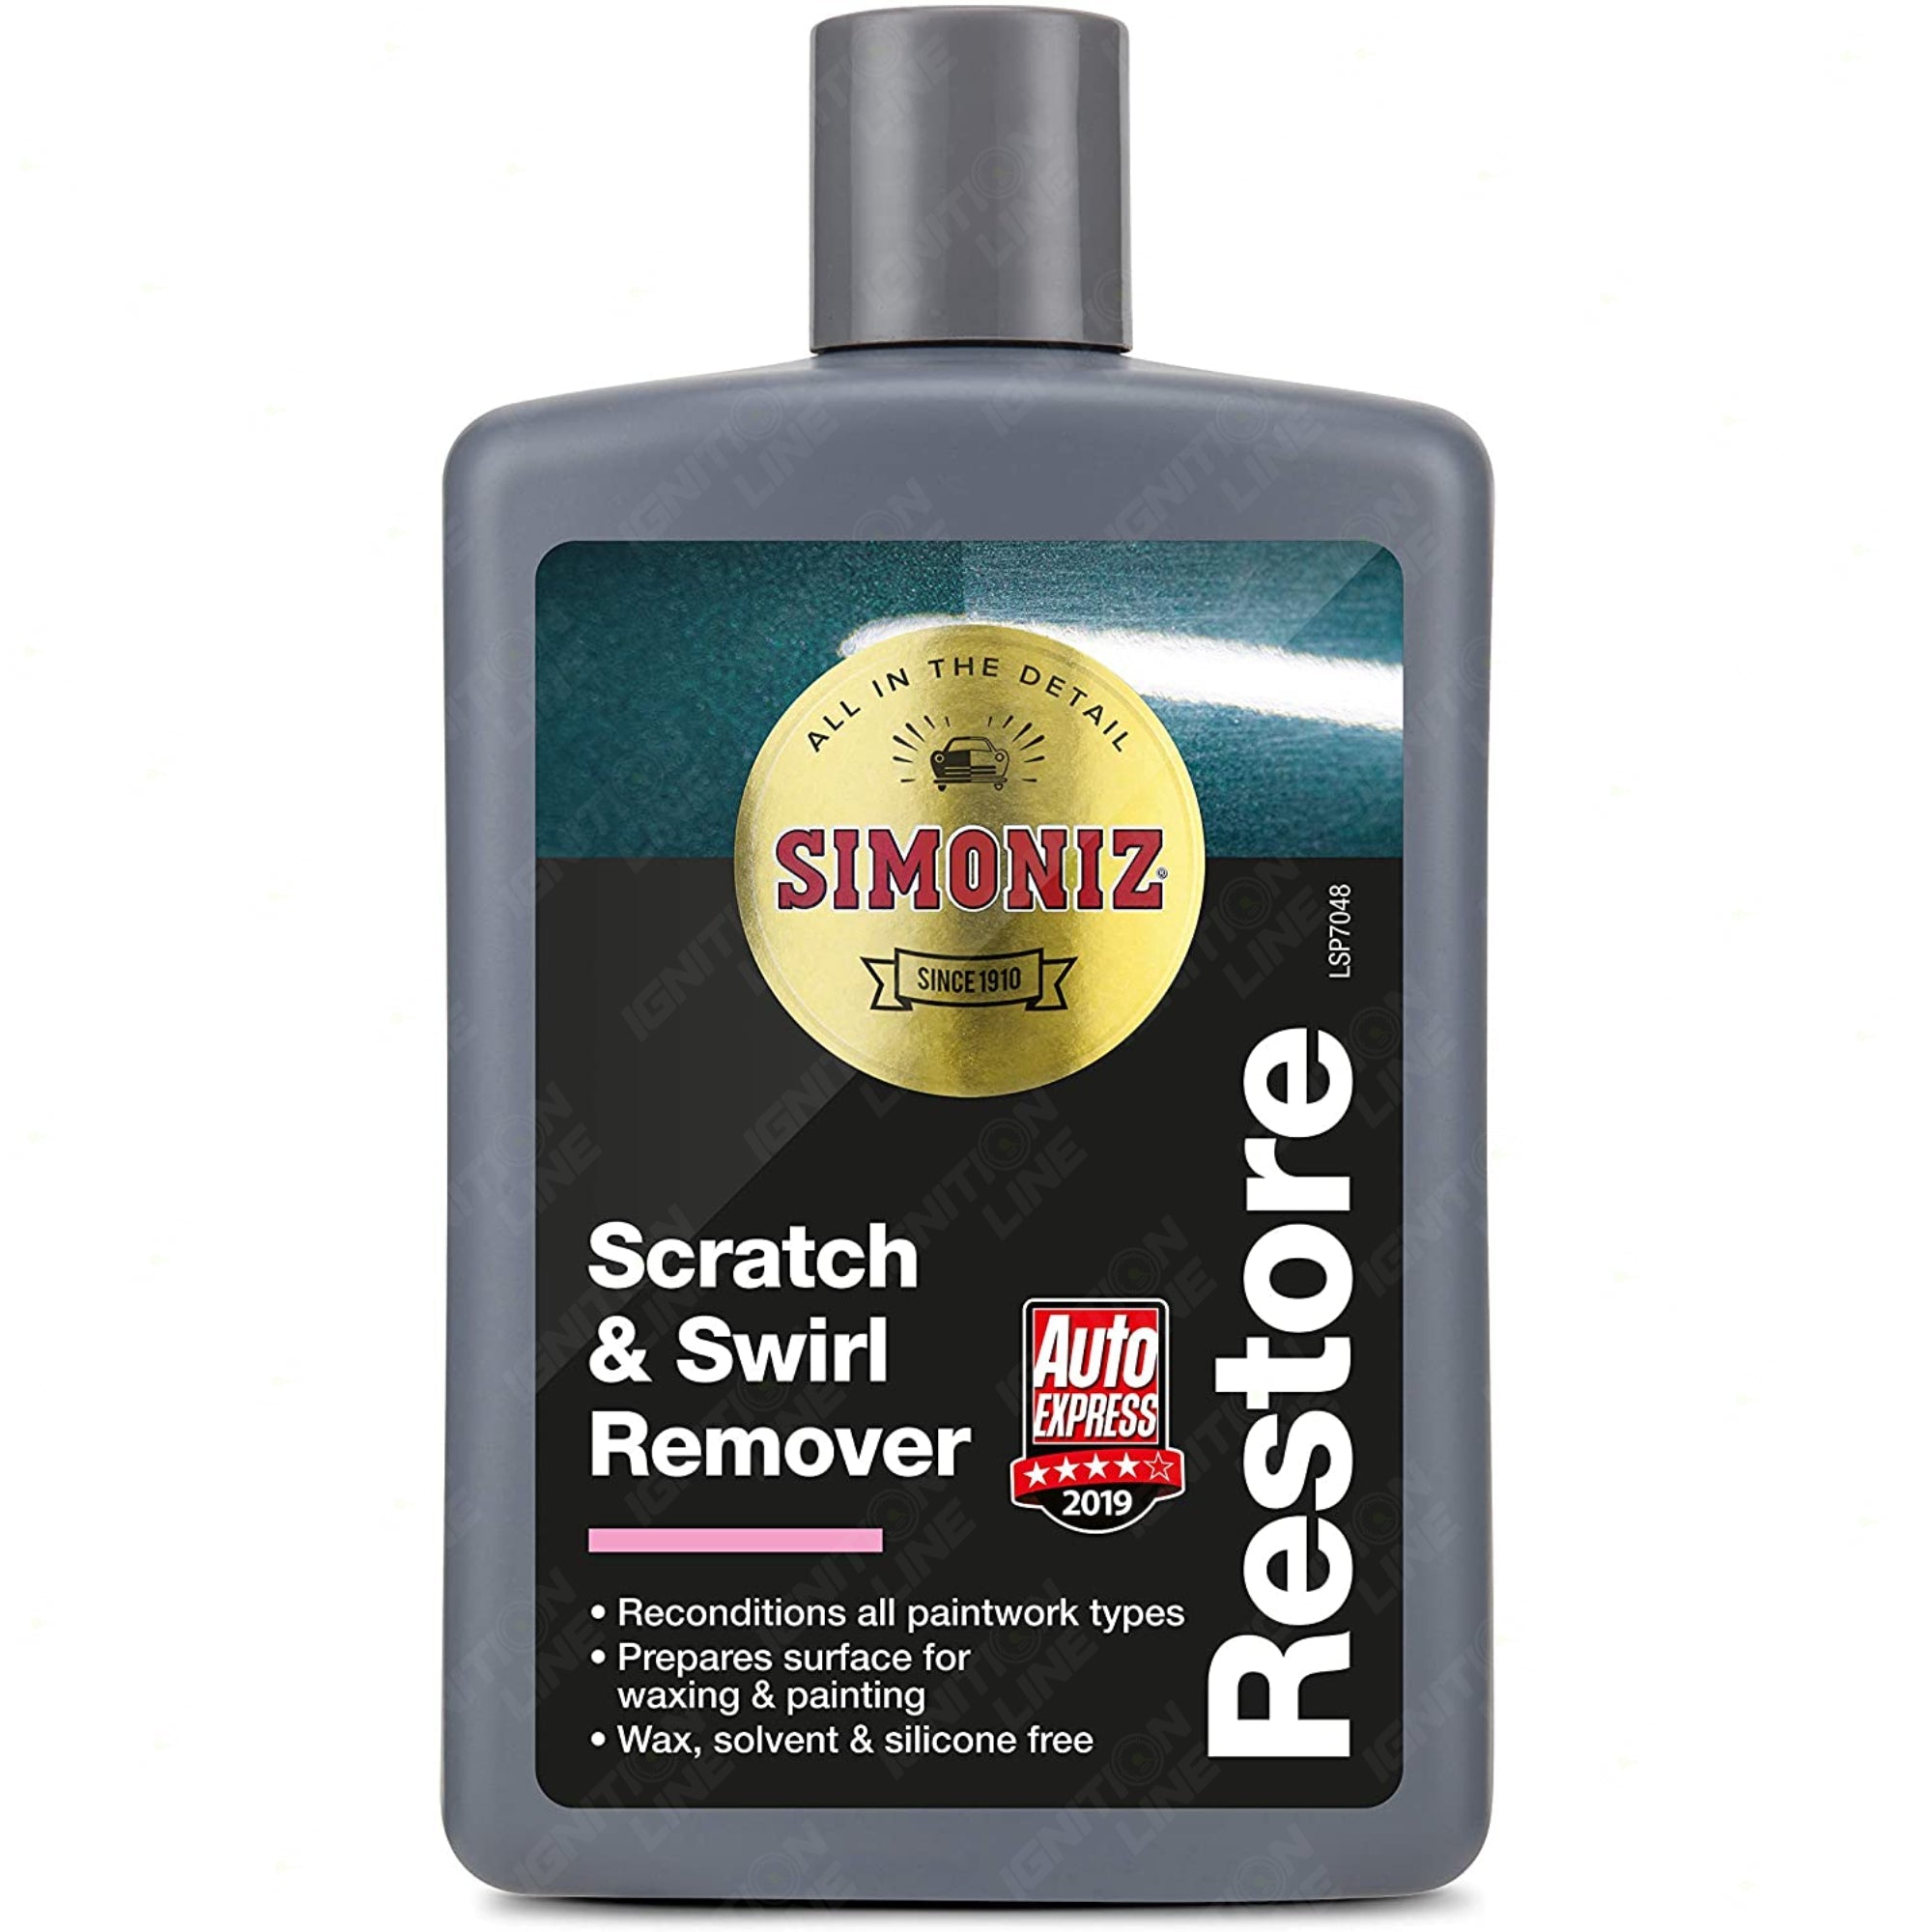 Simoniz Scratch & Swirl Remover